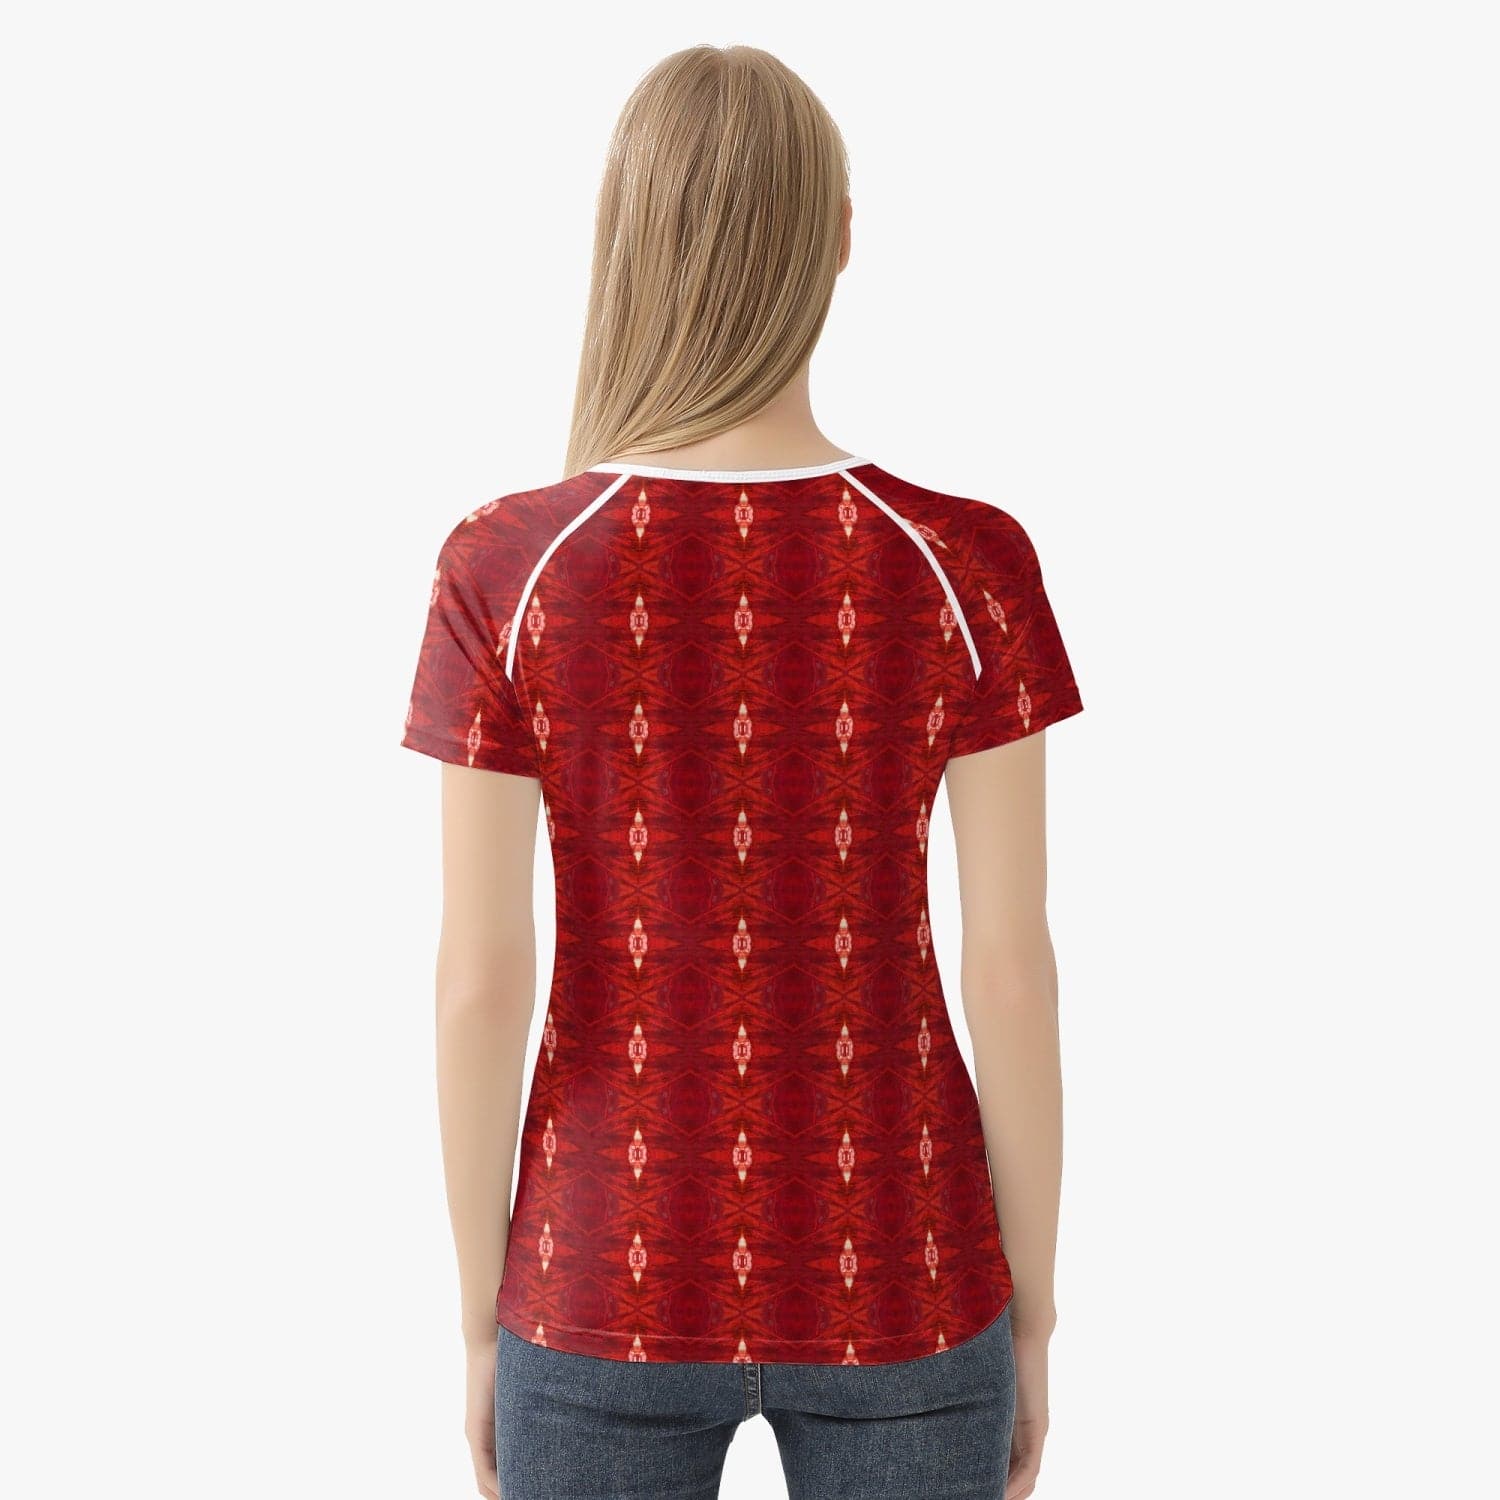 Red Bal Masqué, Handmade Stylish Women T-shirt Sports/ Yoga Top, by Sensus Studio Design